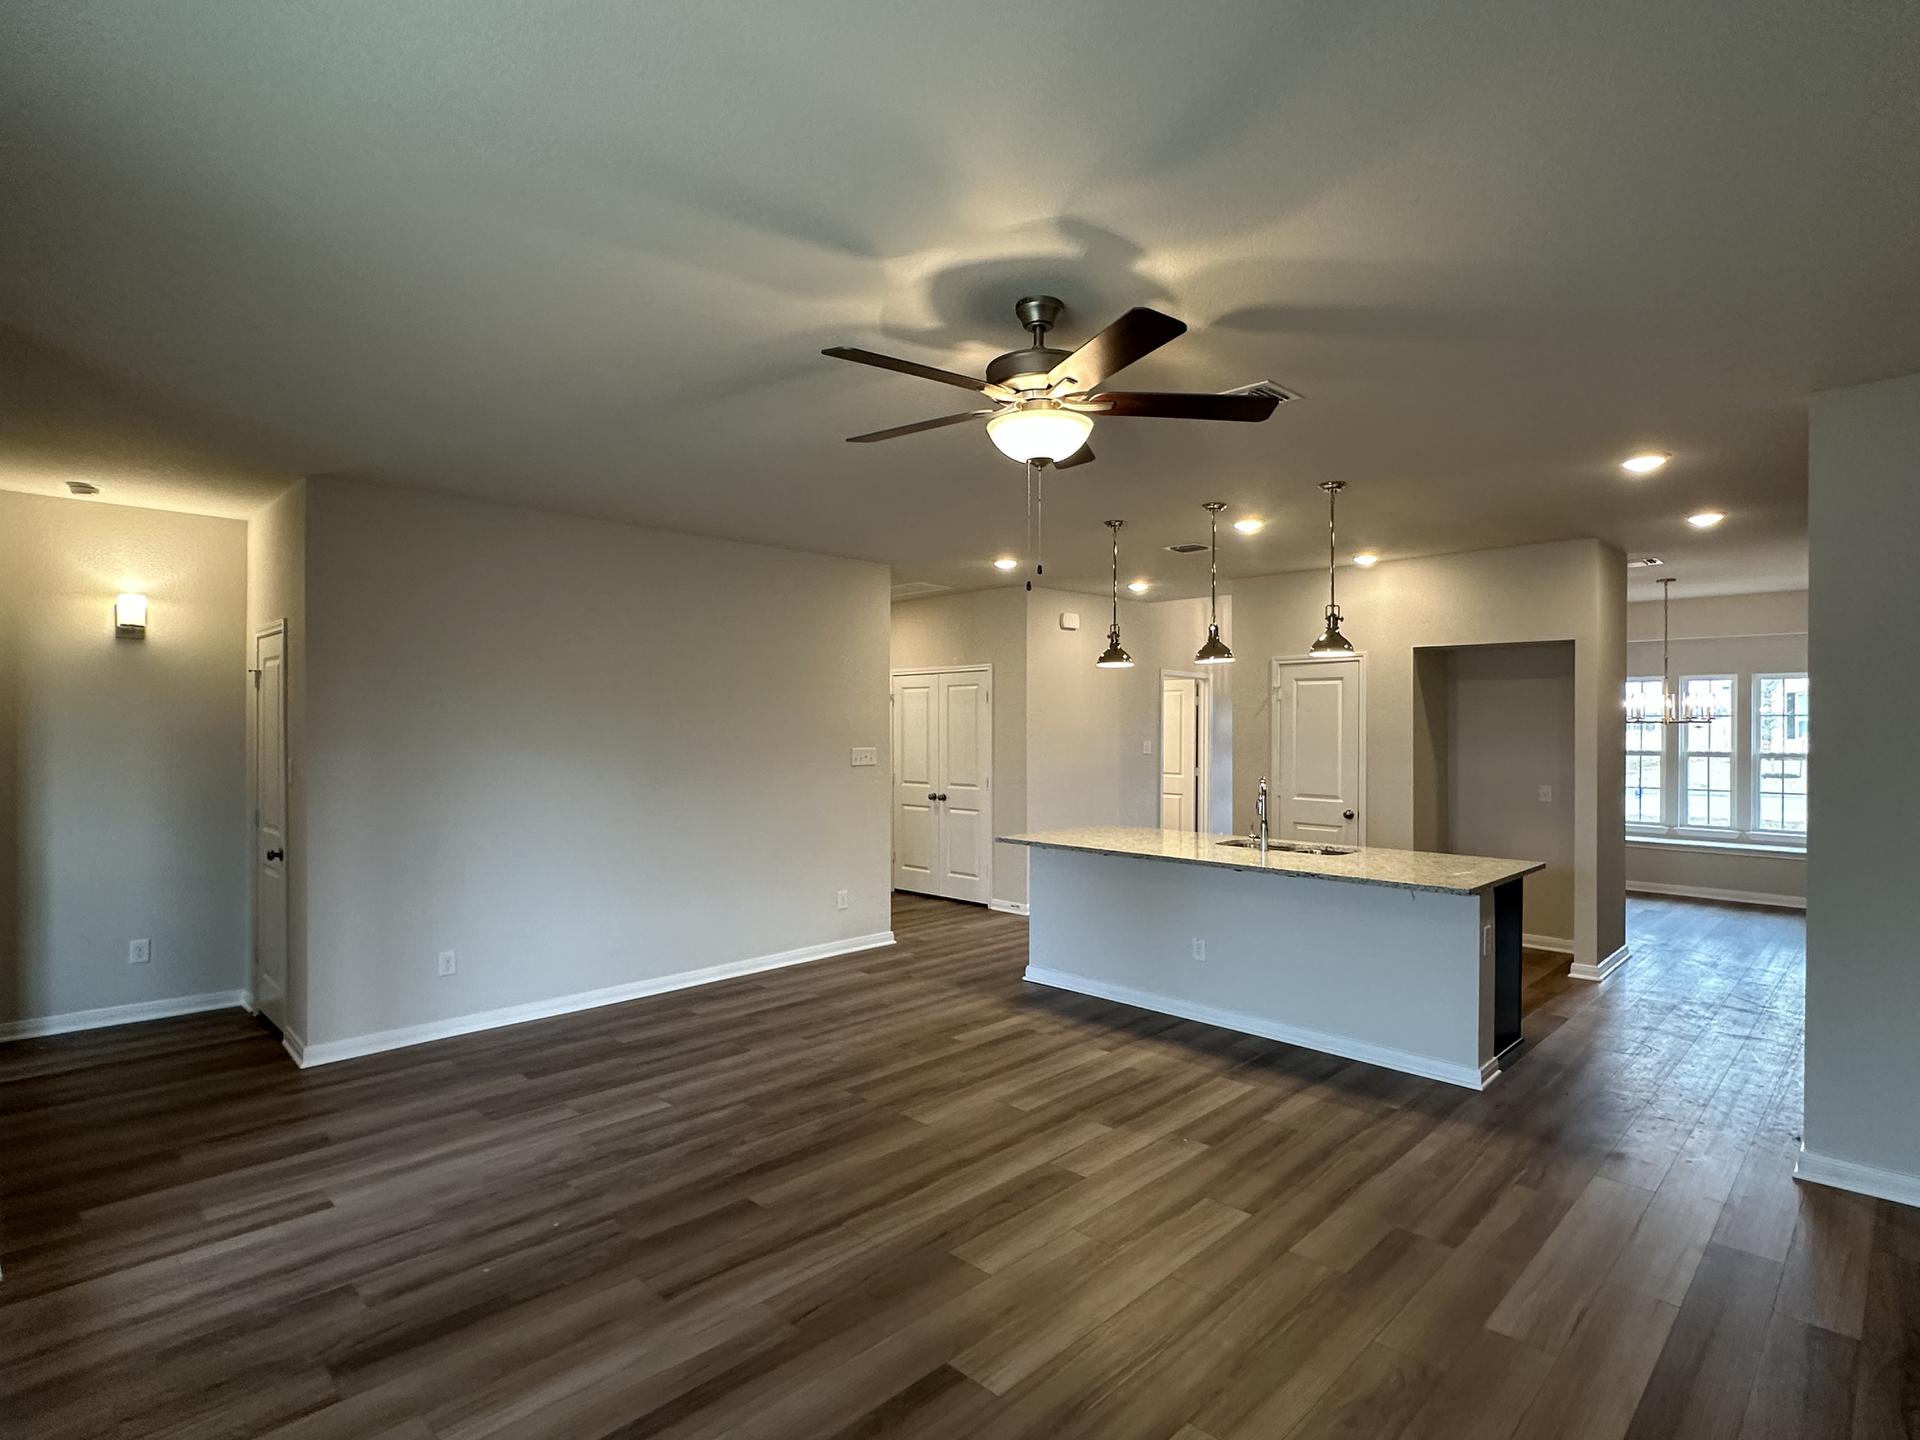 1,657sf New Home in Belton, TX